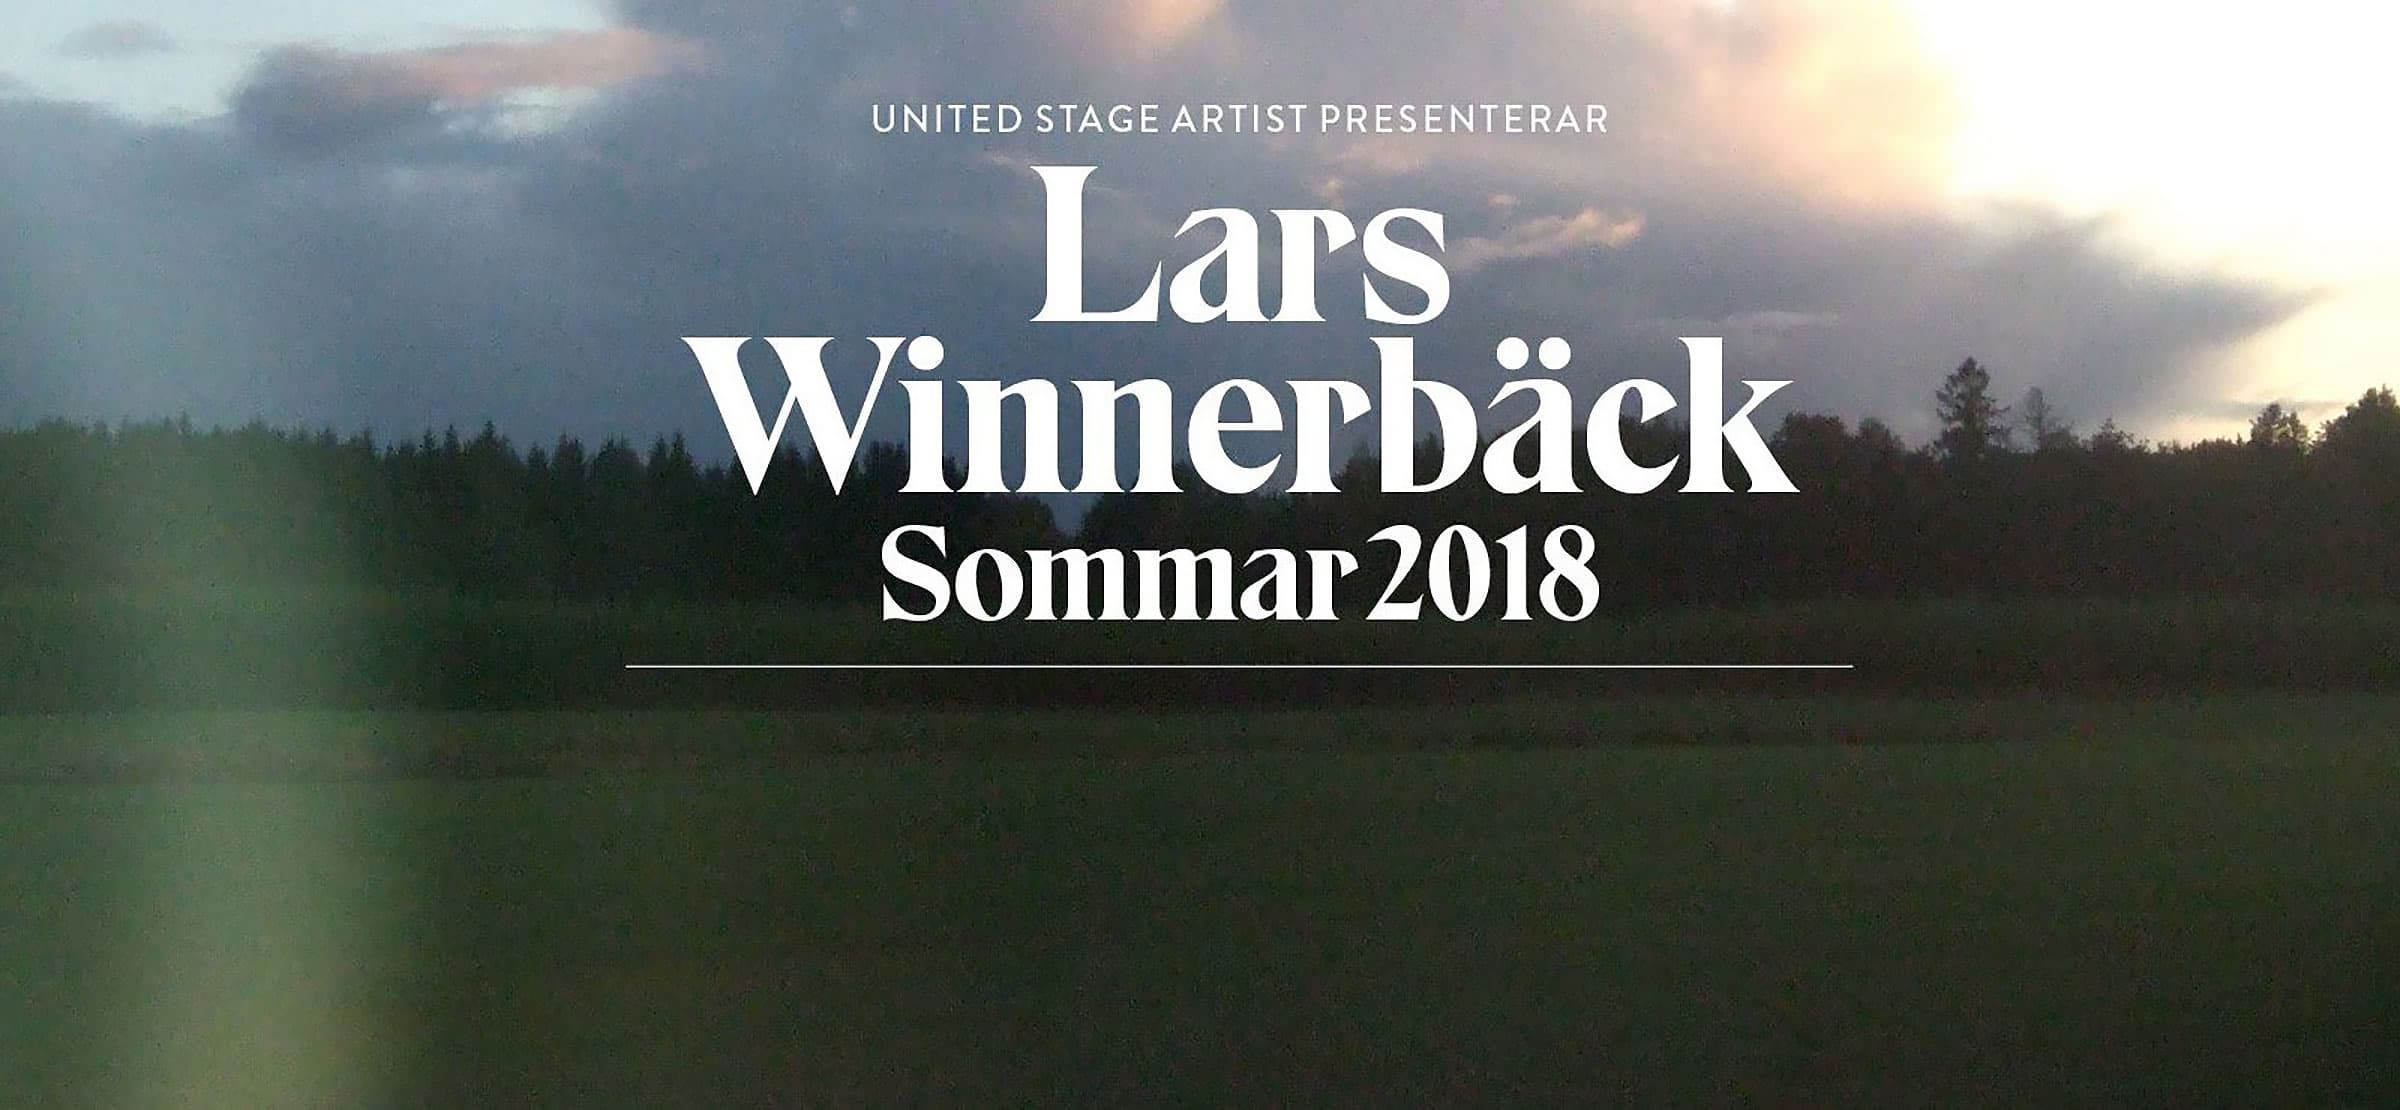 Lars Winnerbäck på sommarturné i Sverige!